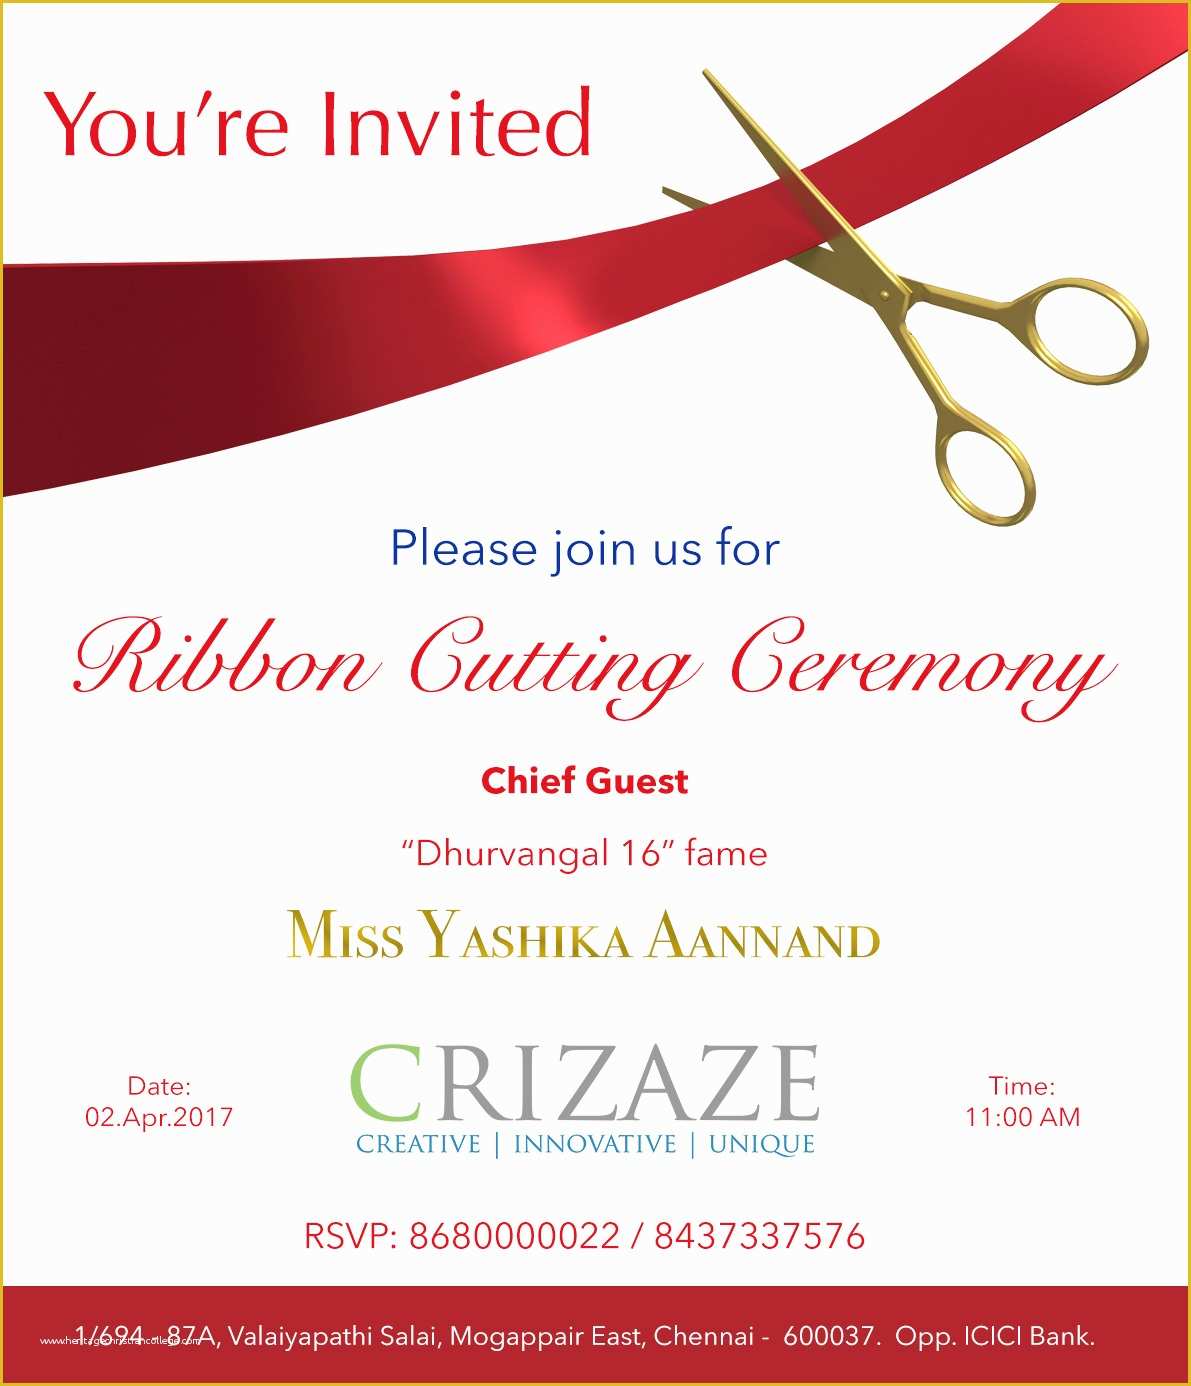 Ribbon Cutting Ceremony Invitation Template Free Of Ribbon Cutting Ceremony Crizaze